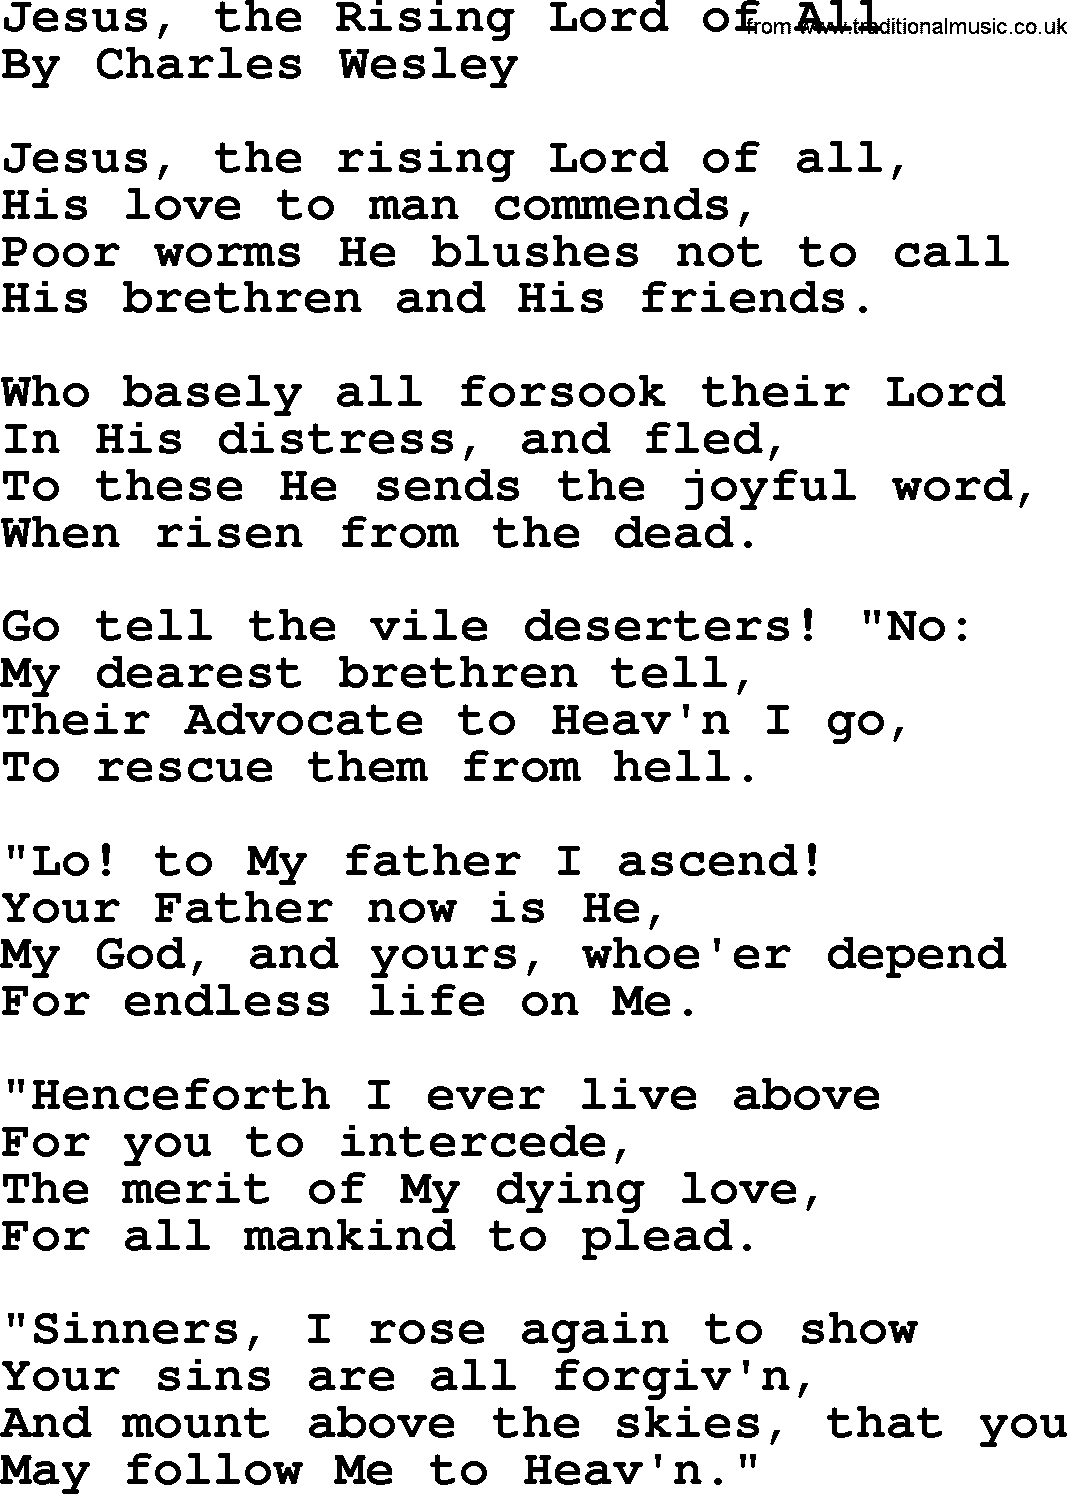 Charles Wesley hymn: Jesus, the Rising Lord of All, lyrics